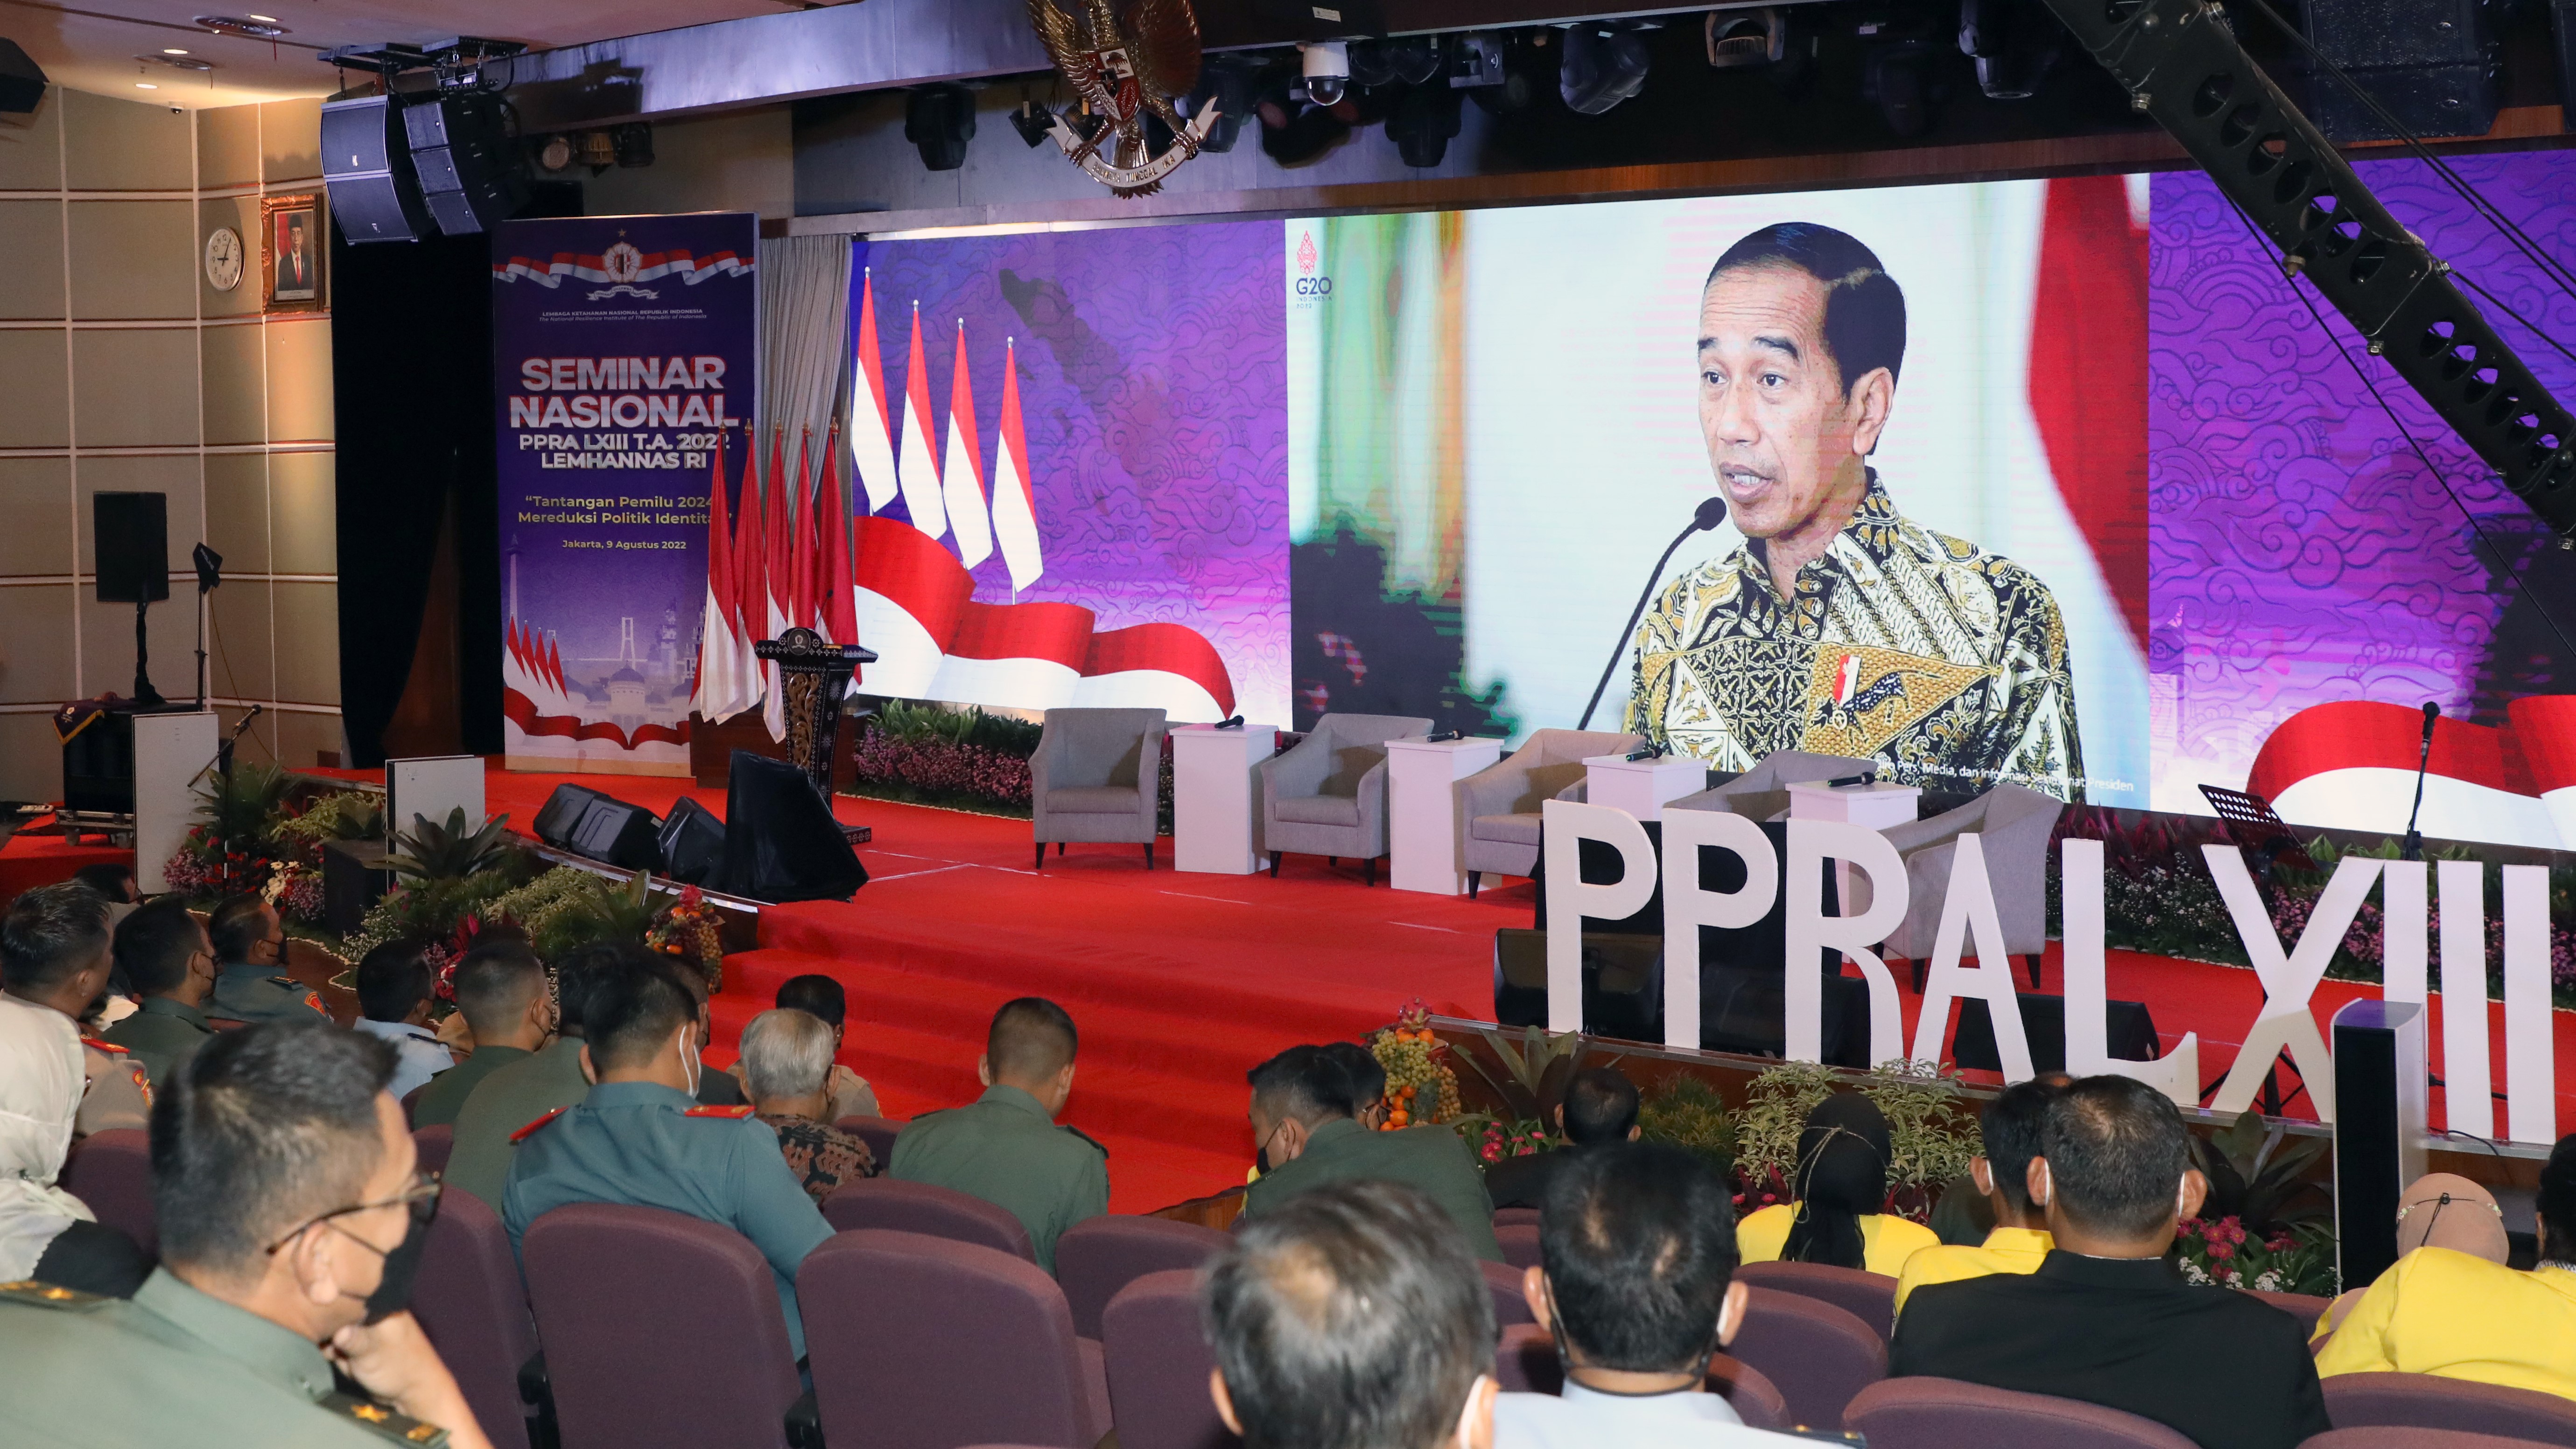 Presiden RI Joko Widodo Menyambut Baik Seminar Nasional PPRA 63 Lemhannas RI